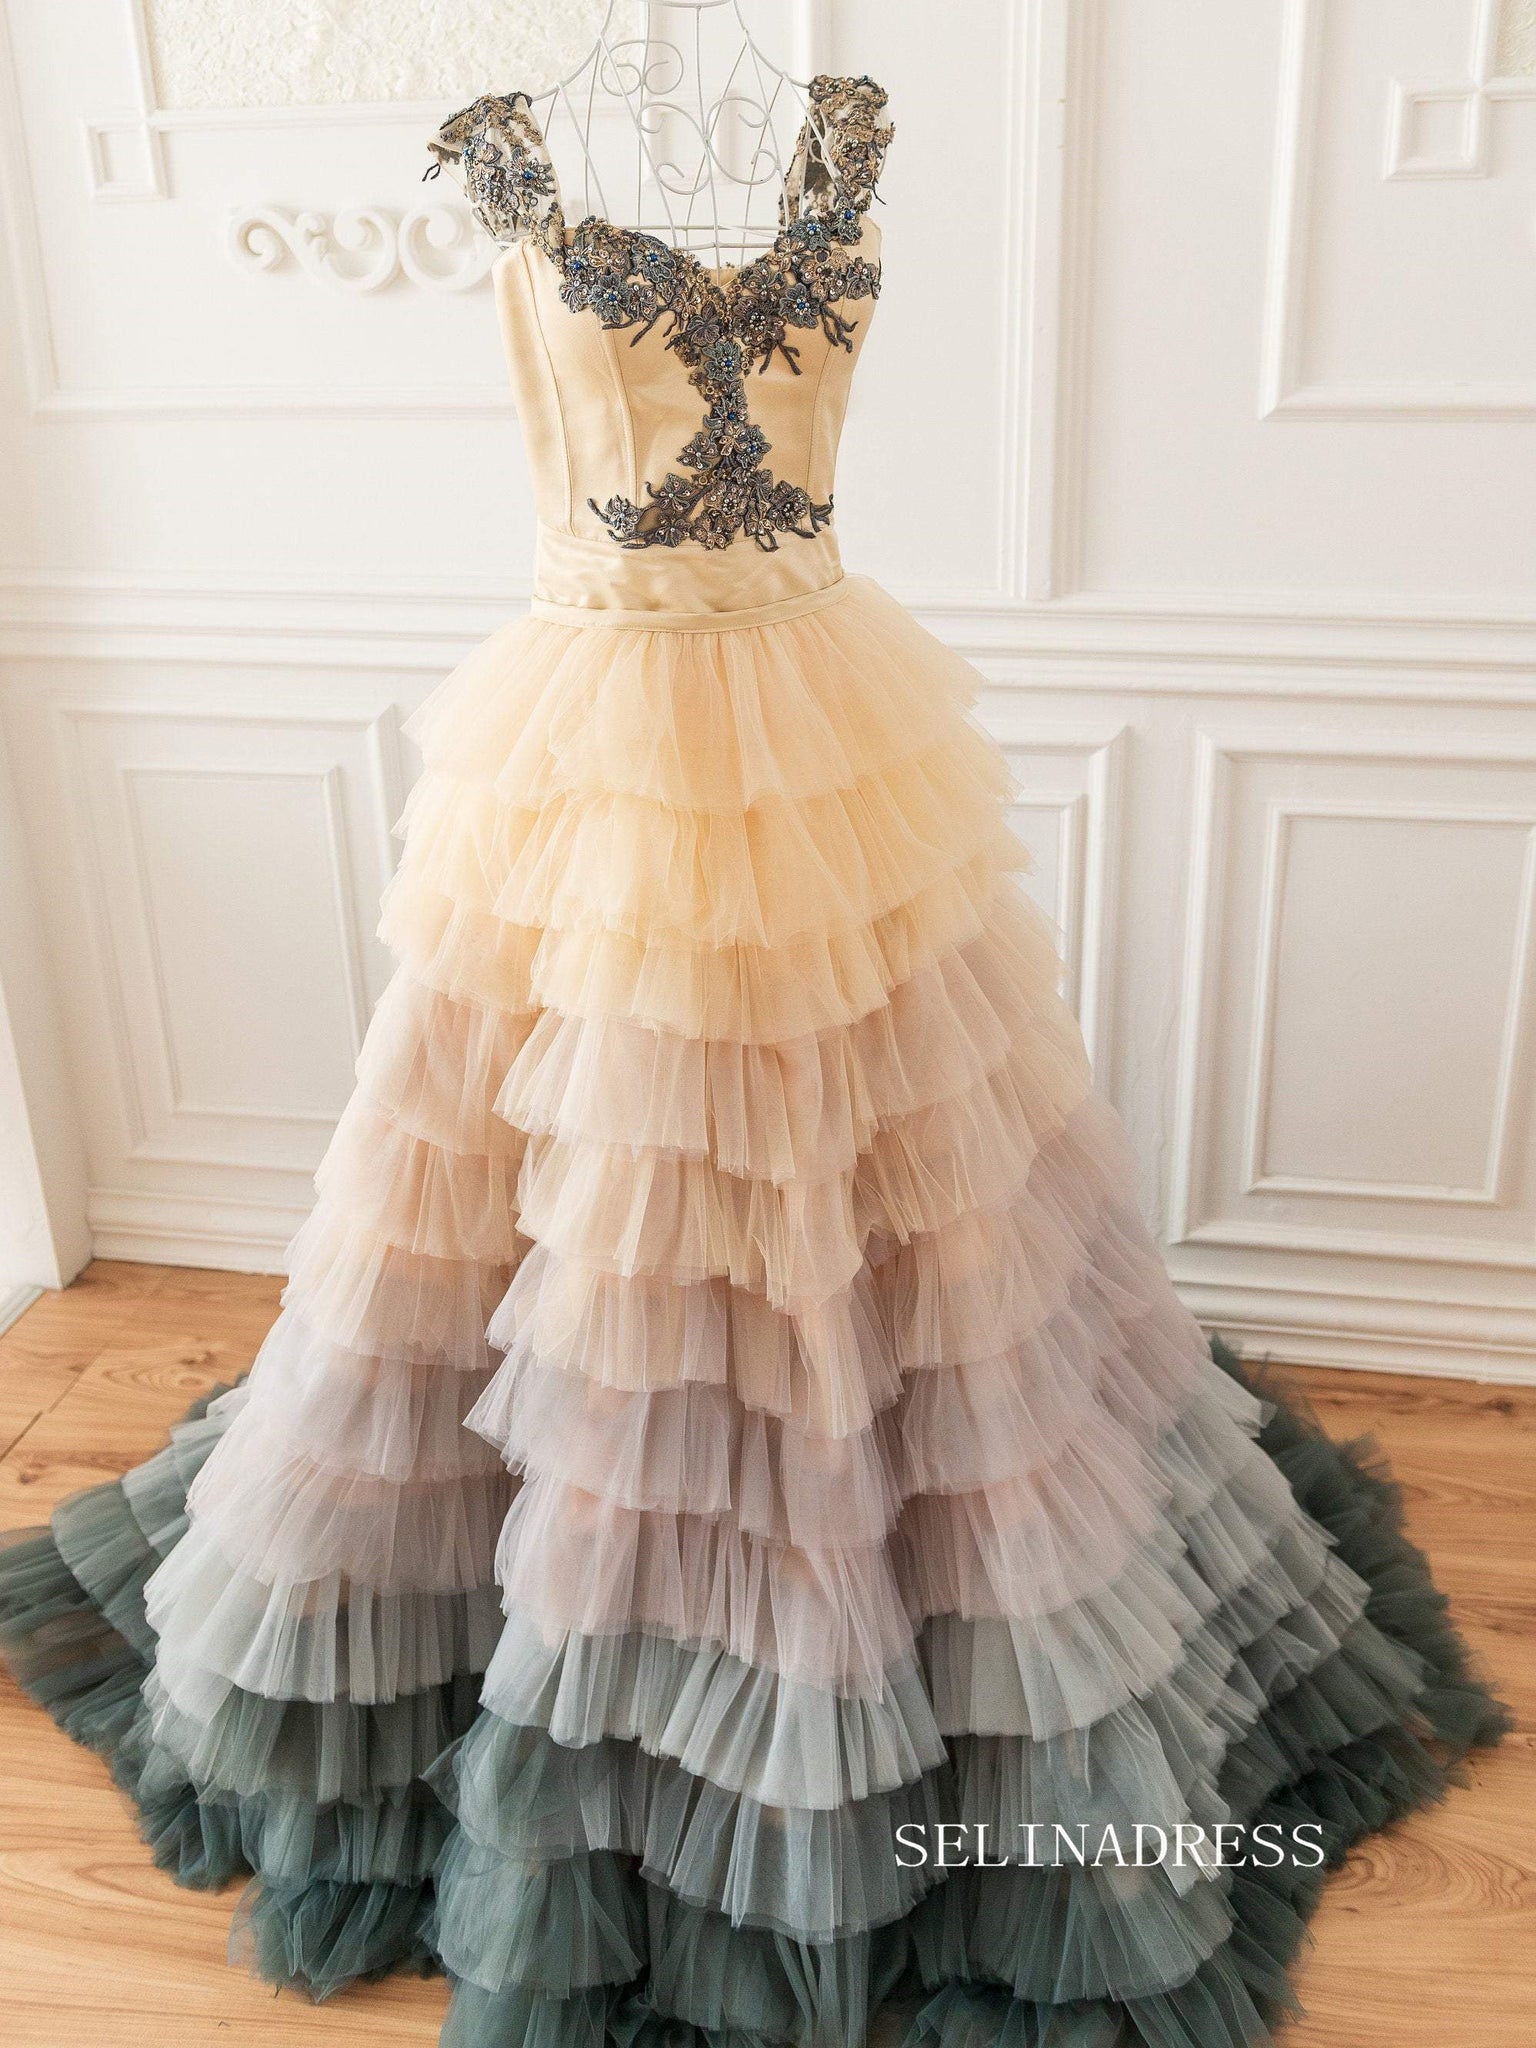 Modest Wedding Dresses for Conservative Brides - Kleinfeld | Kleinfeld  Bridal